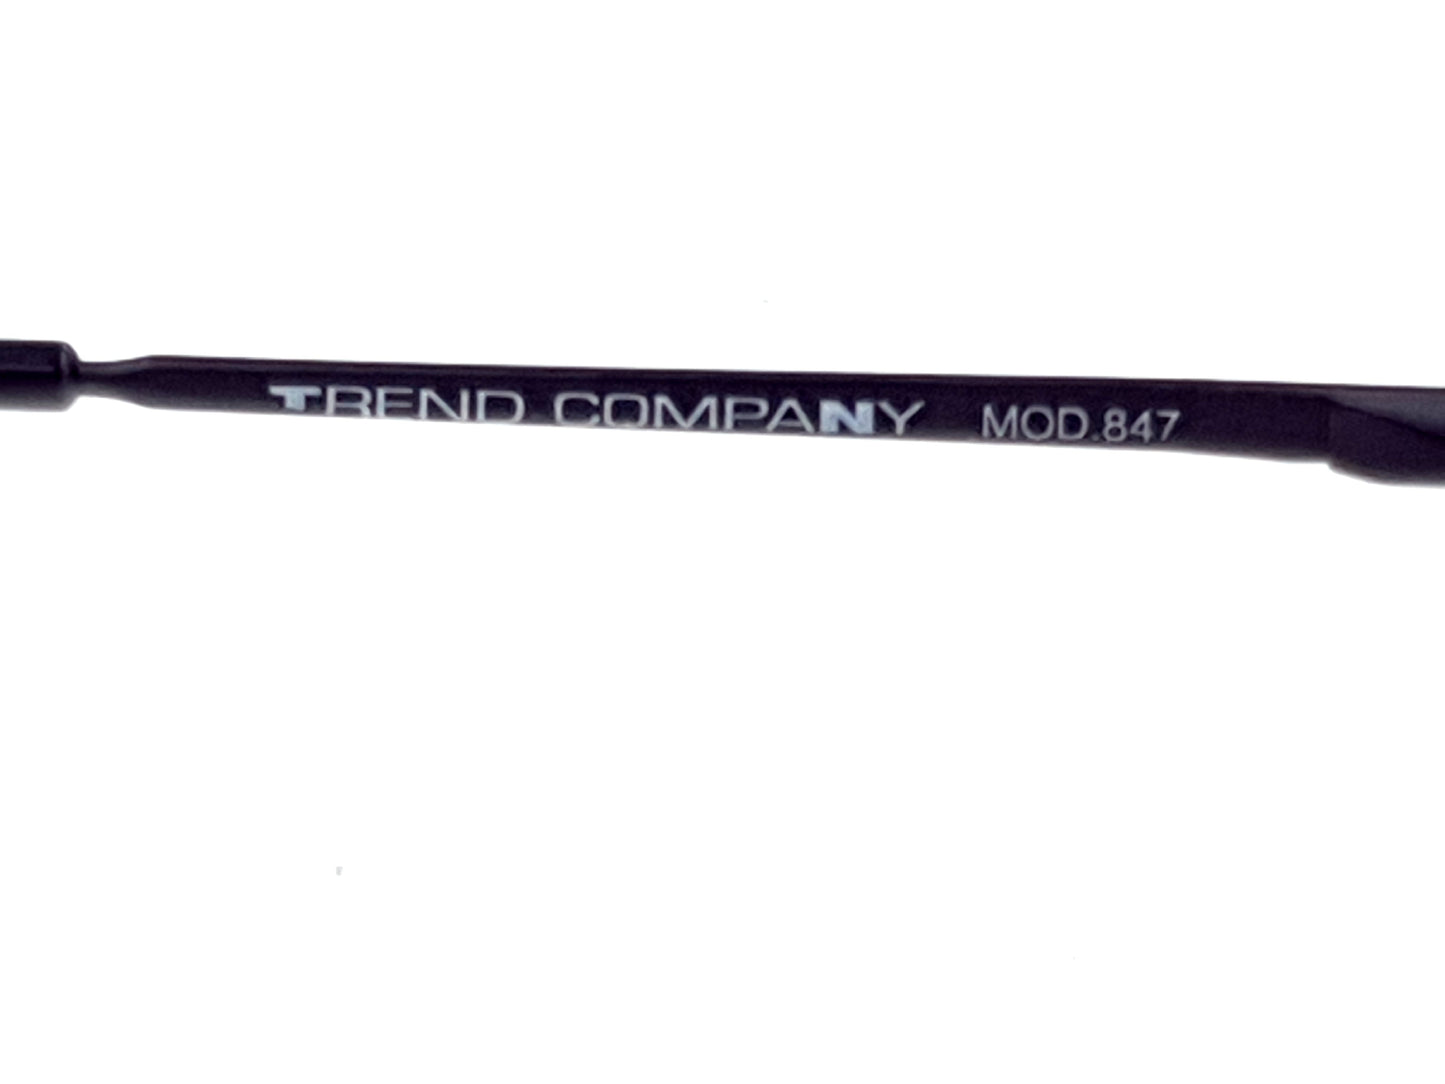 TREND COMPANY MOD.847 CL.1